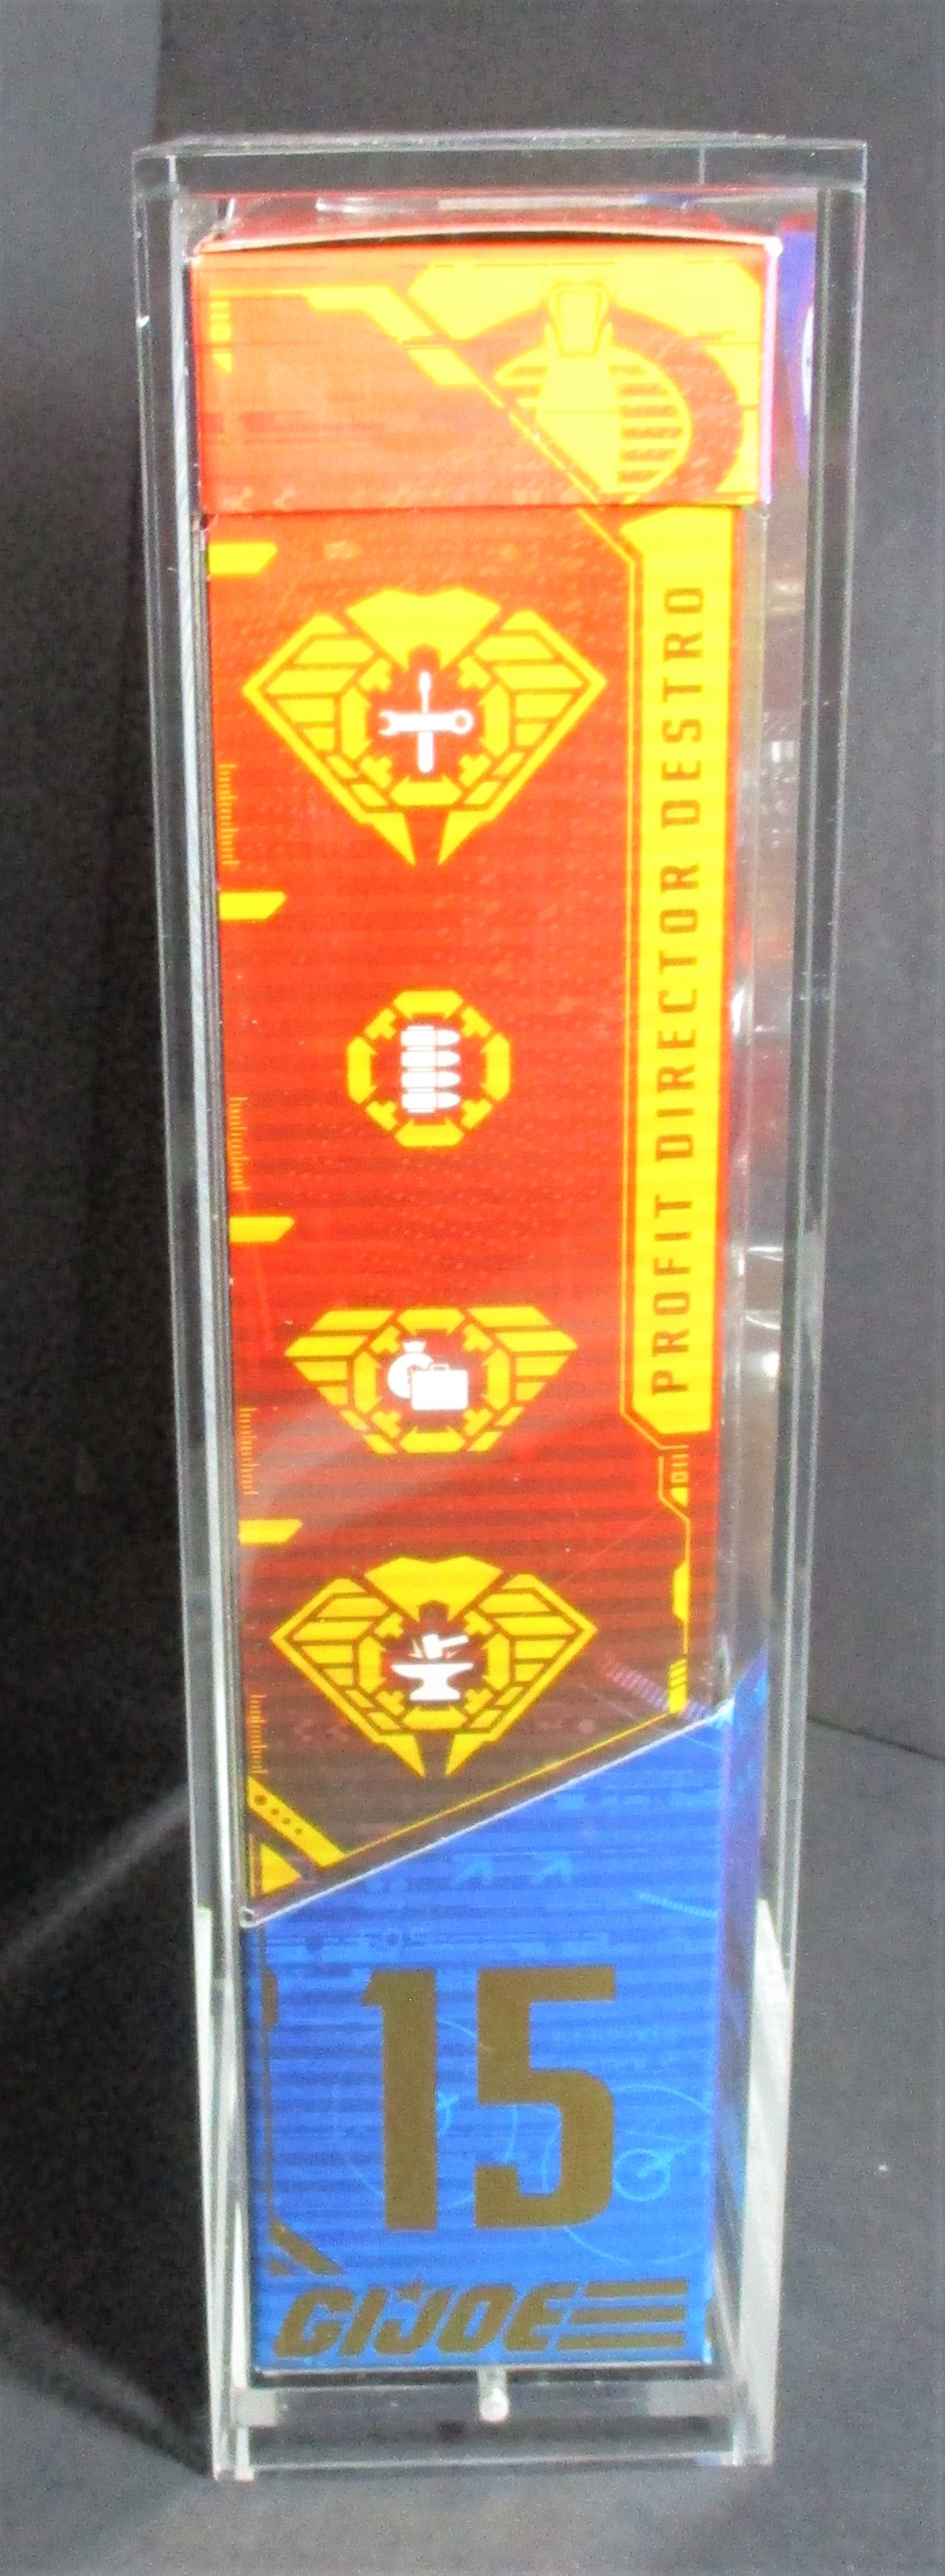 5x G.I. Joe 6 Action Figure Acrylic Display Guard (60037)